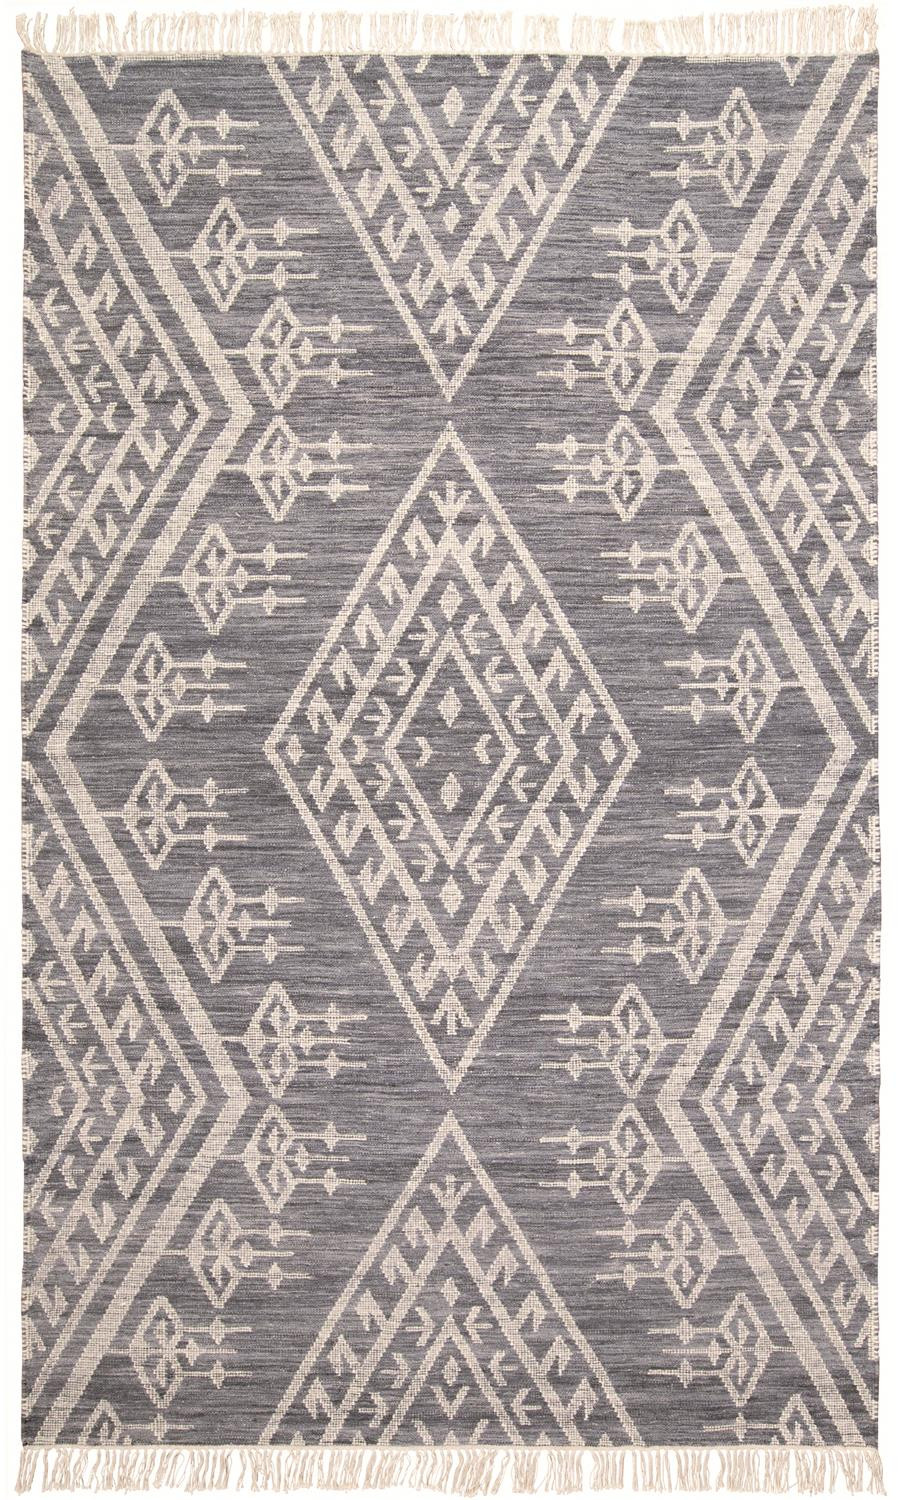 8' X 10' Gray Ivory And Blue Wool Geometric Dhurrie Flatweave Handmade Area Rug With Fringe-511991-1